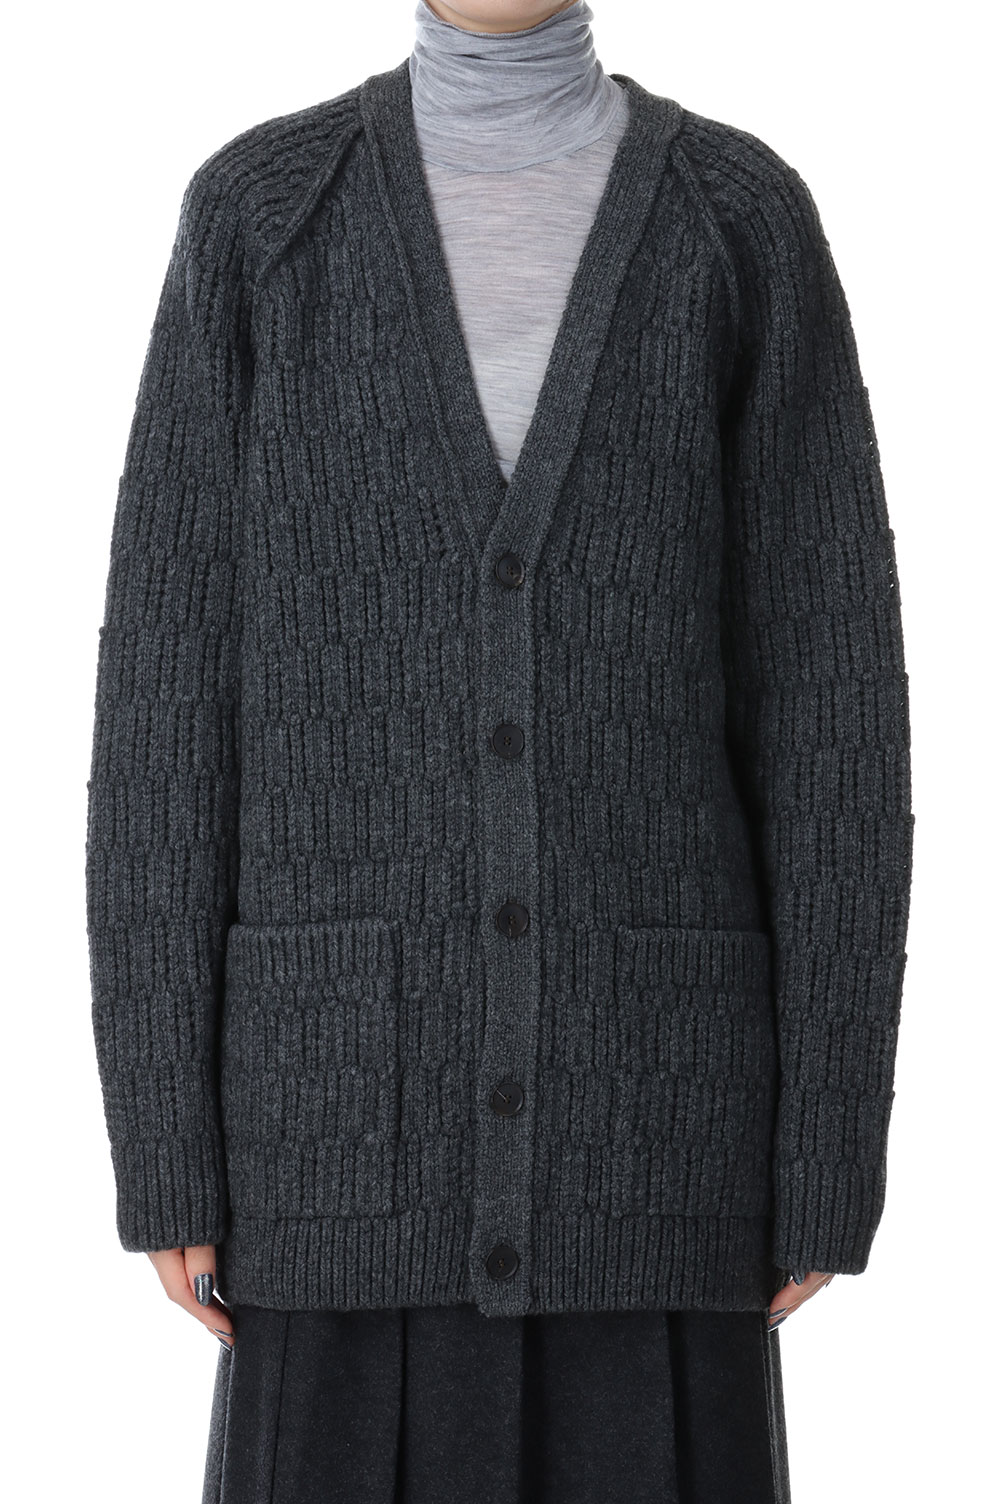 ootho Wool Rib Design Knit Charcoal Grey-